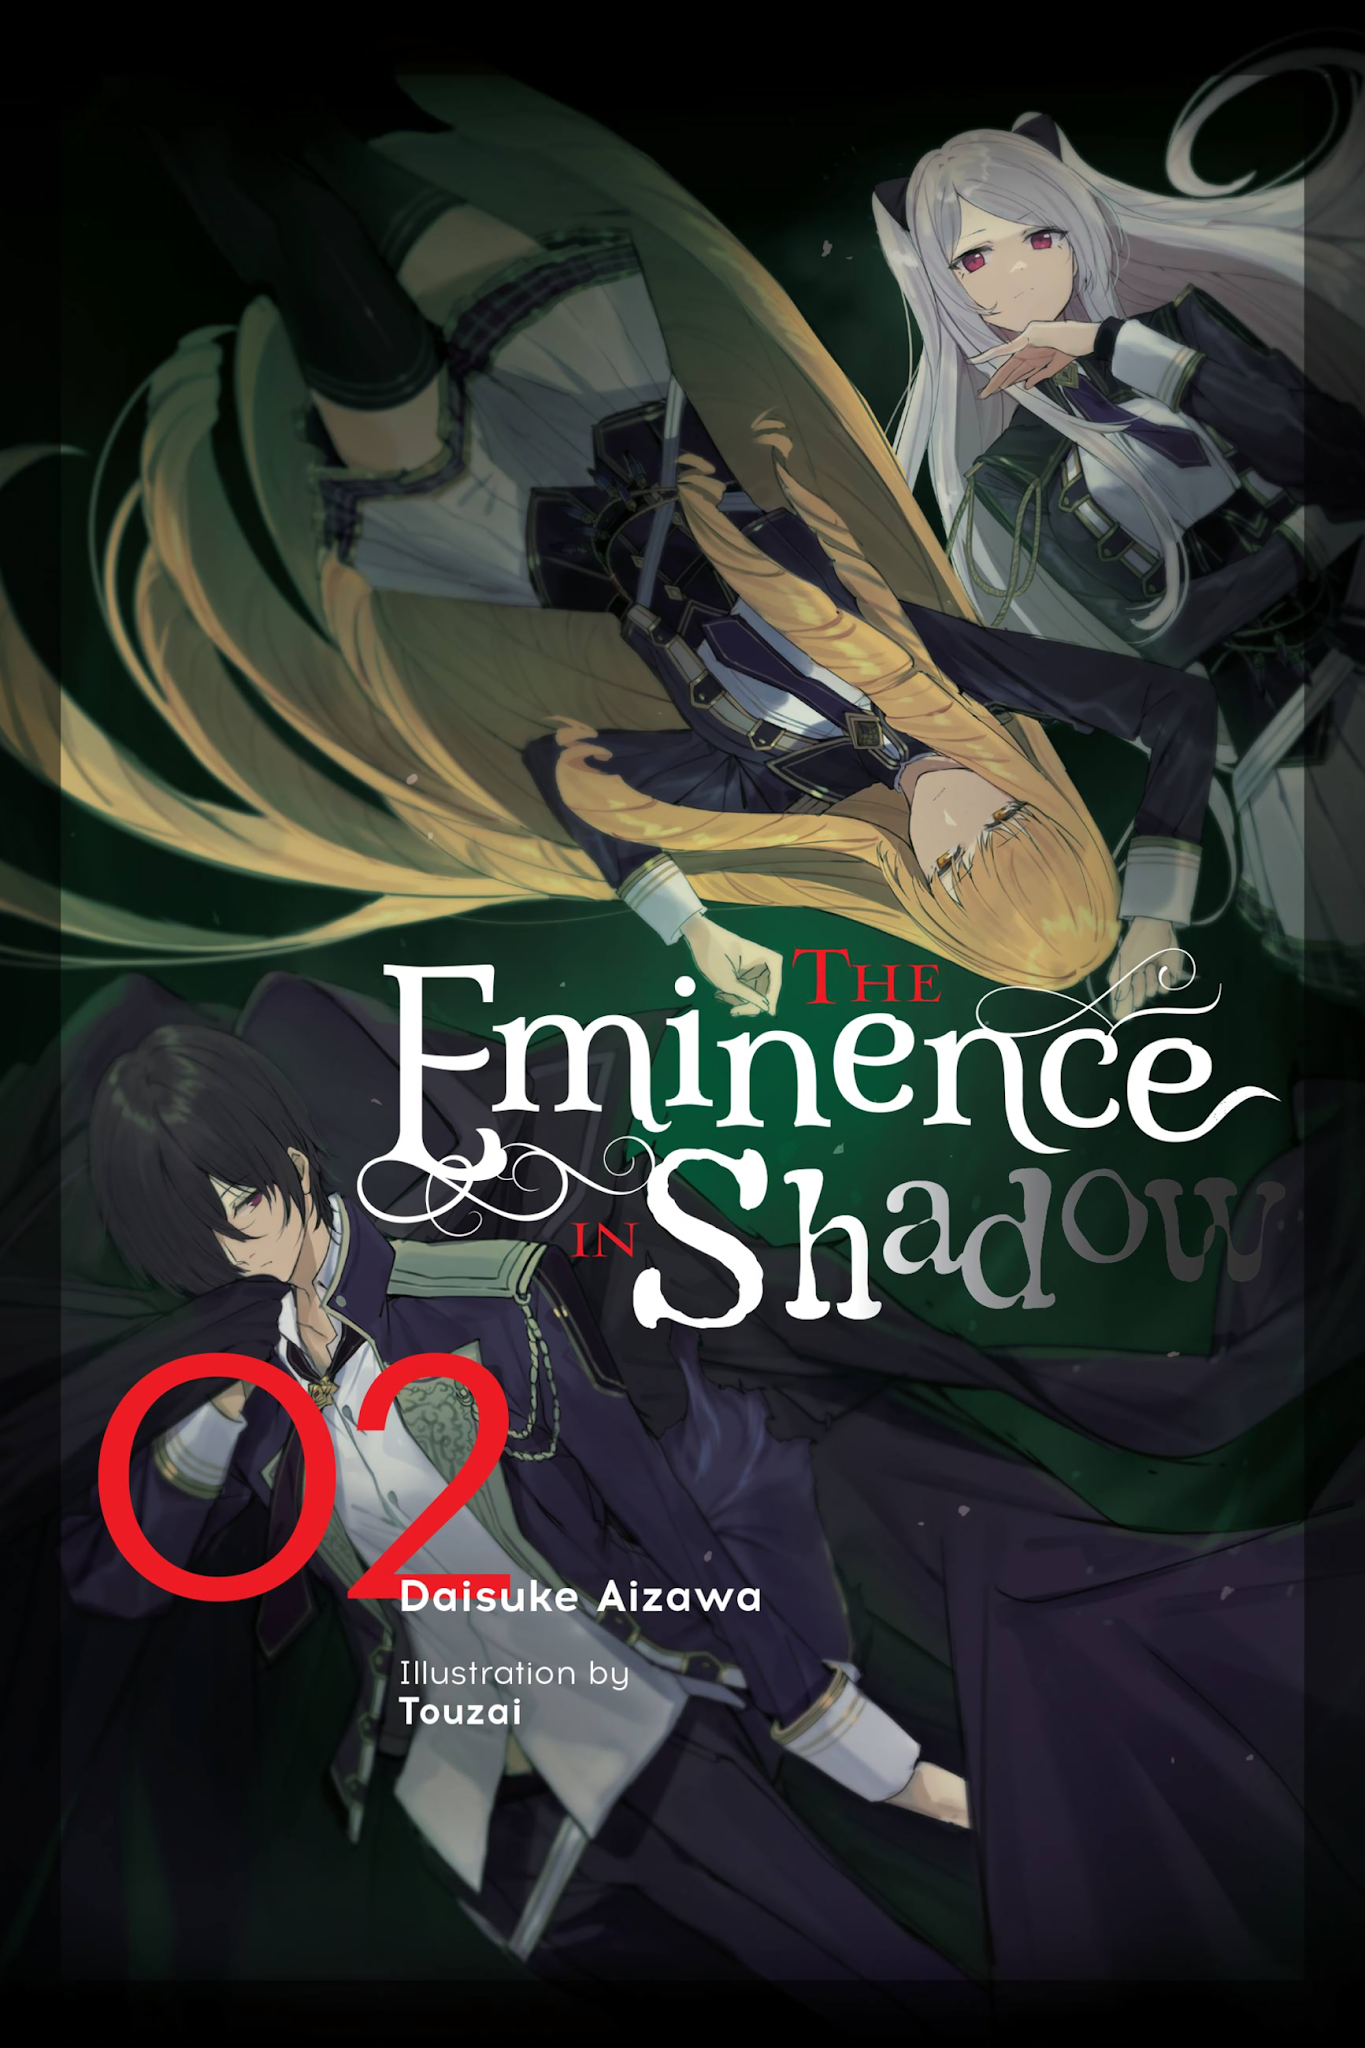 Vezi detalii pentru The Eminence in Shadow (Light Novel) - Volume 2 | Daisuke Aizawa